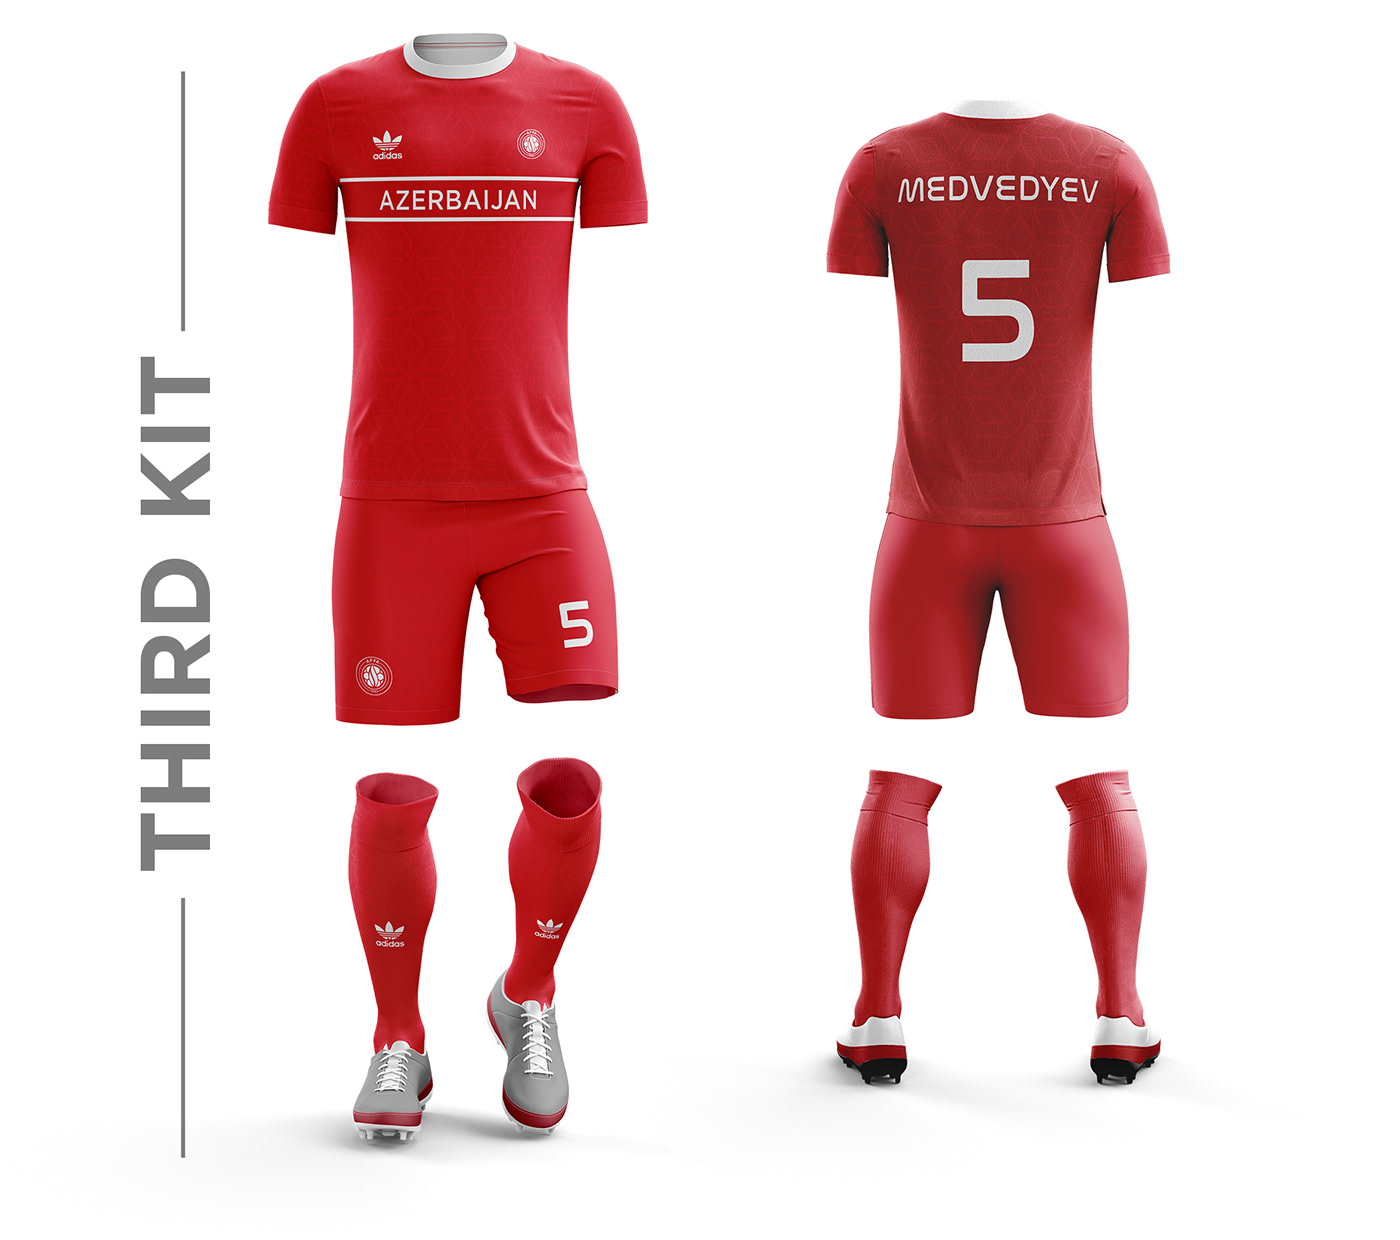 adidas AFFA azerbaijan baku brand identity football logo modern redesign soccerbrand